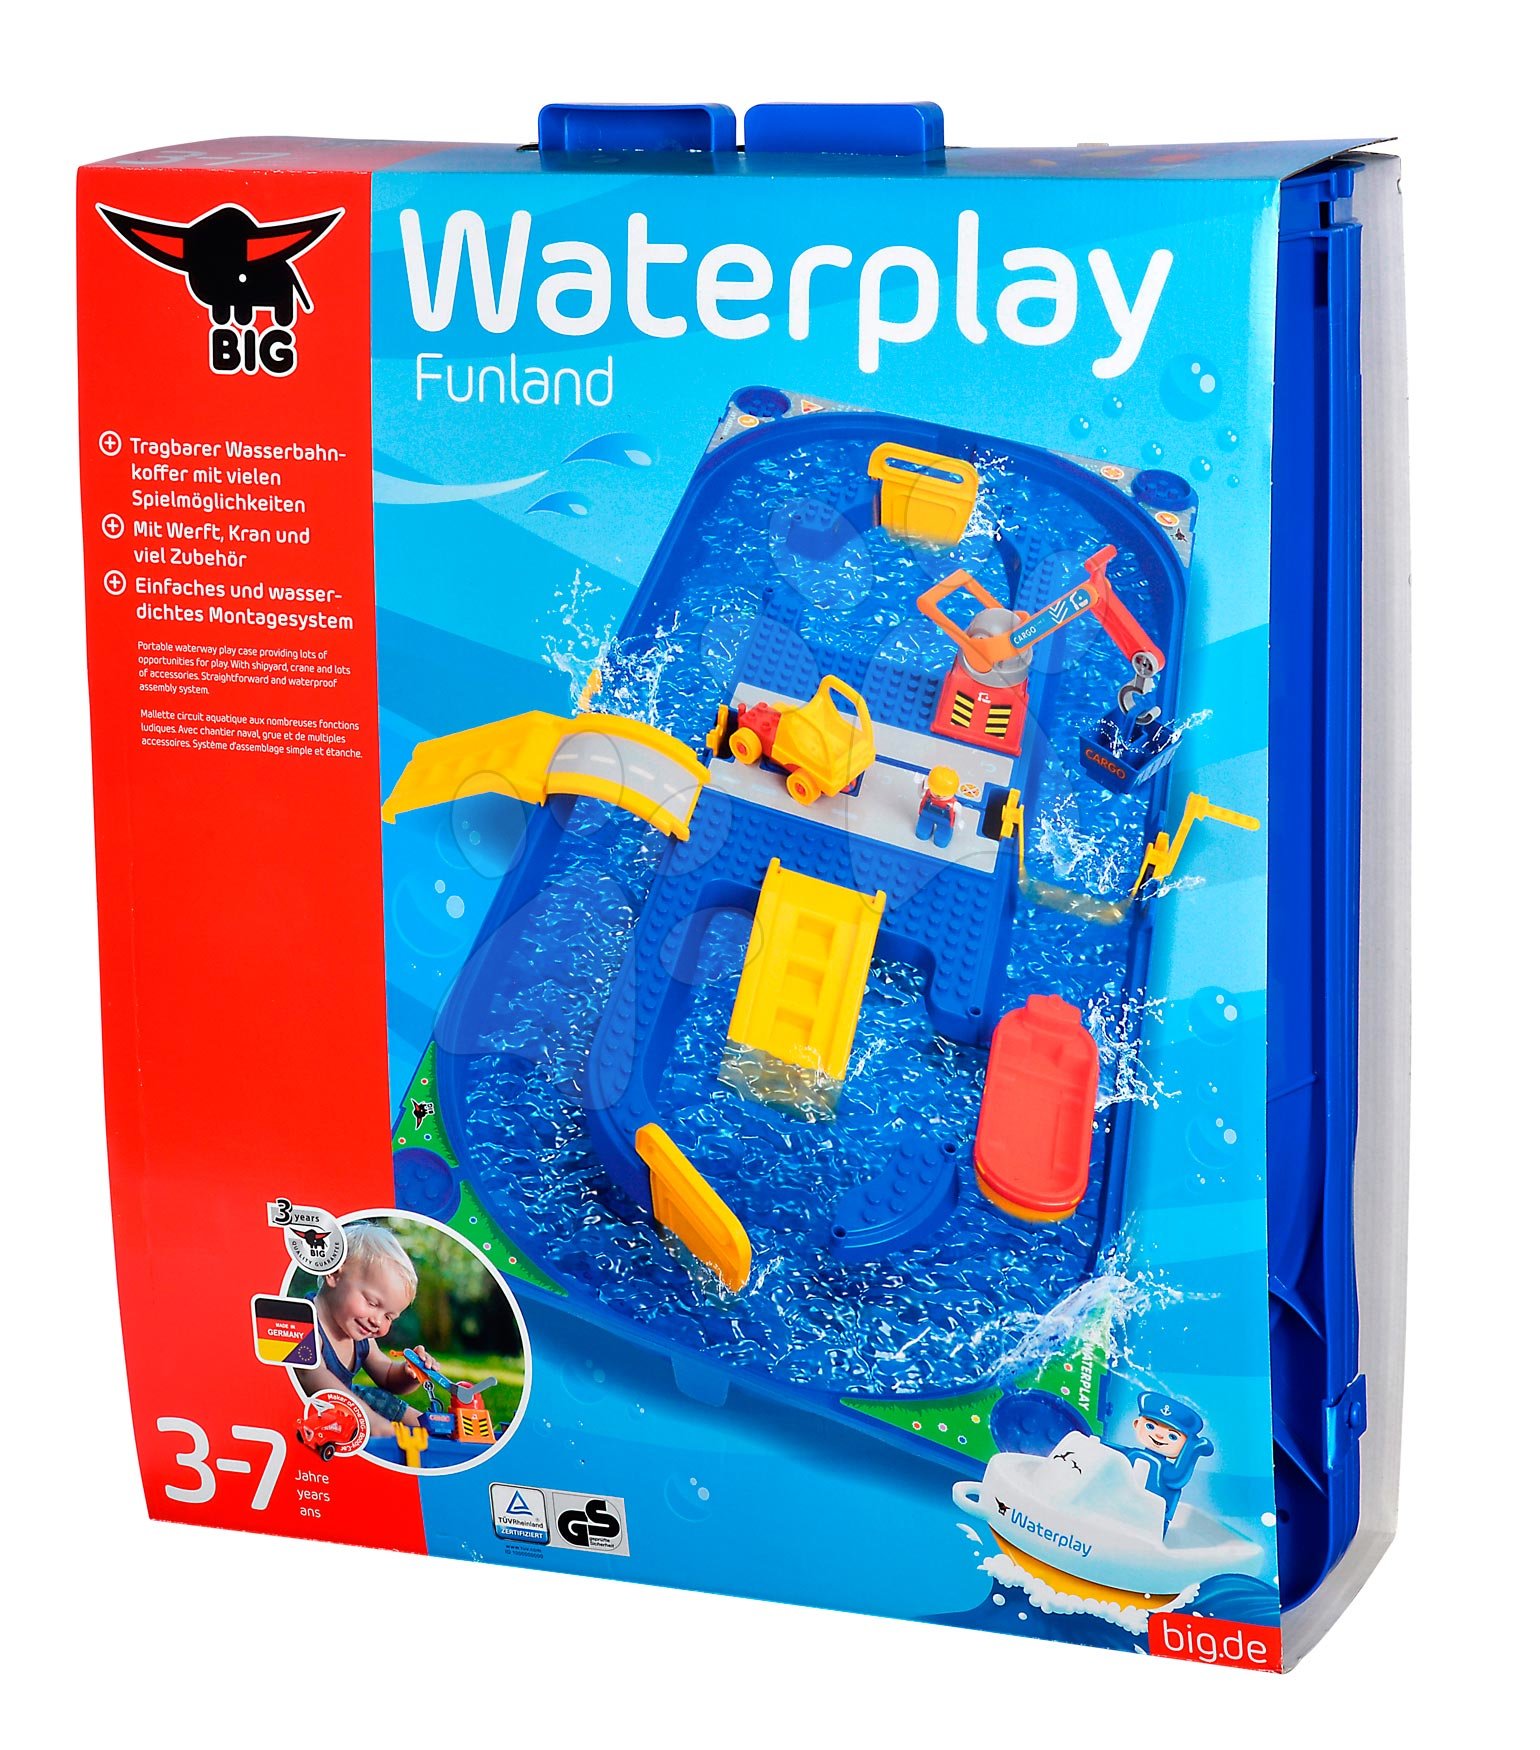 Big 727 1680 Funland Waterplay Grande 